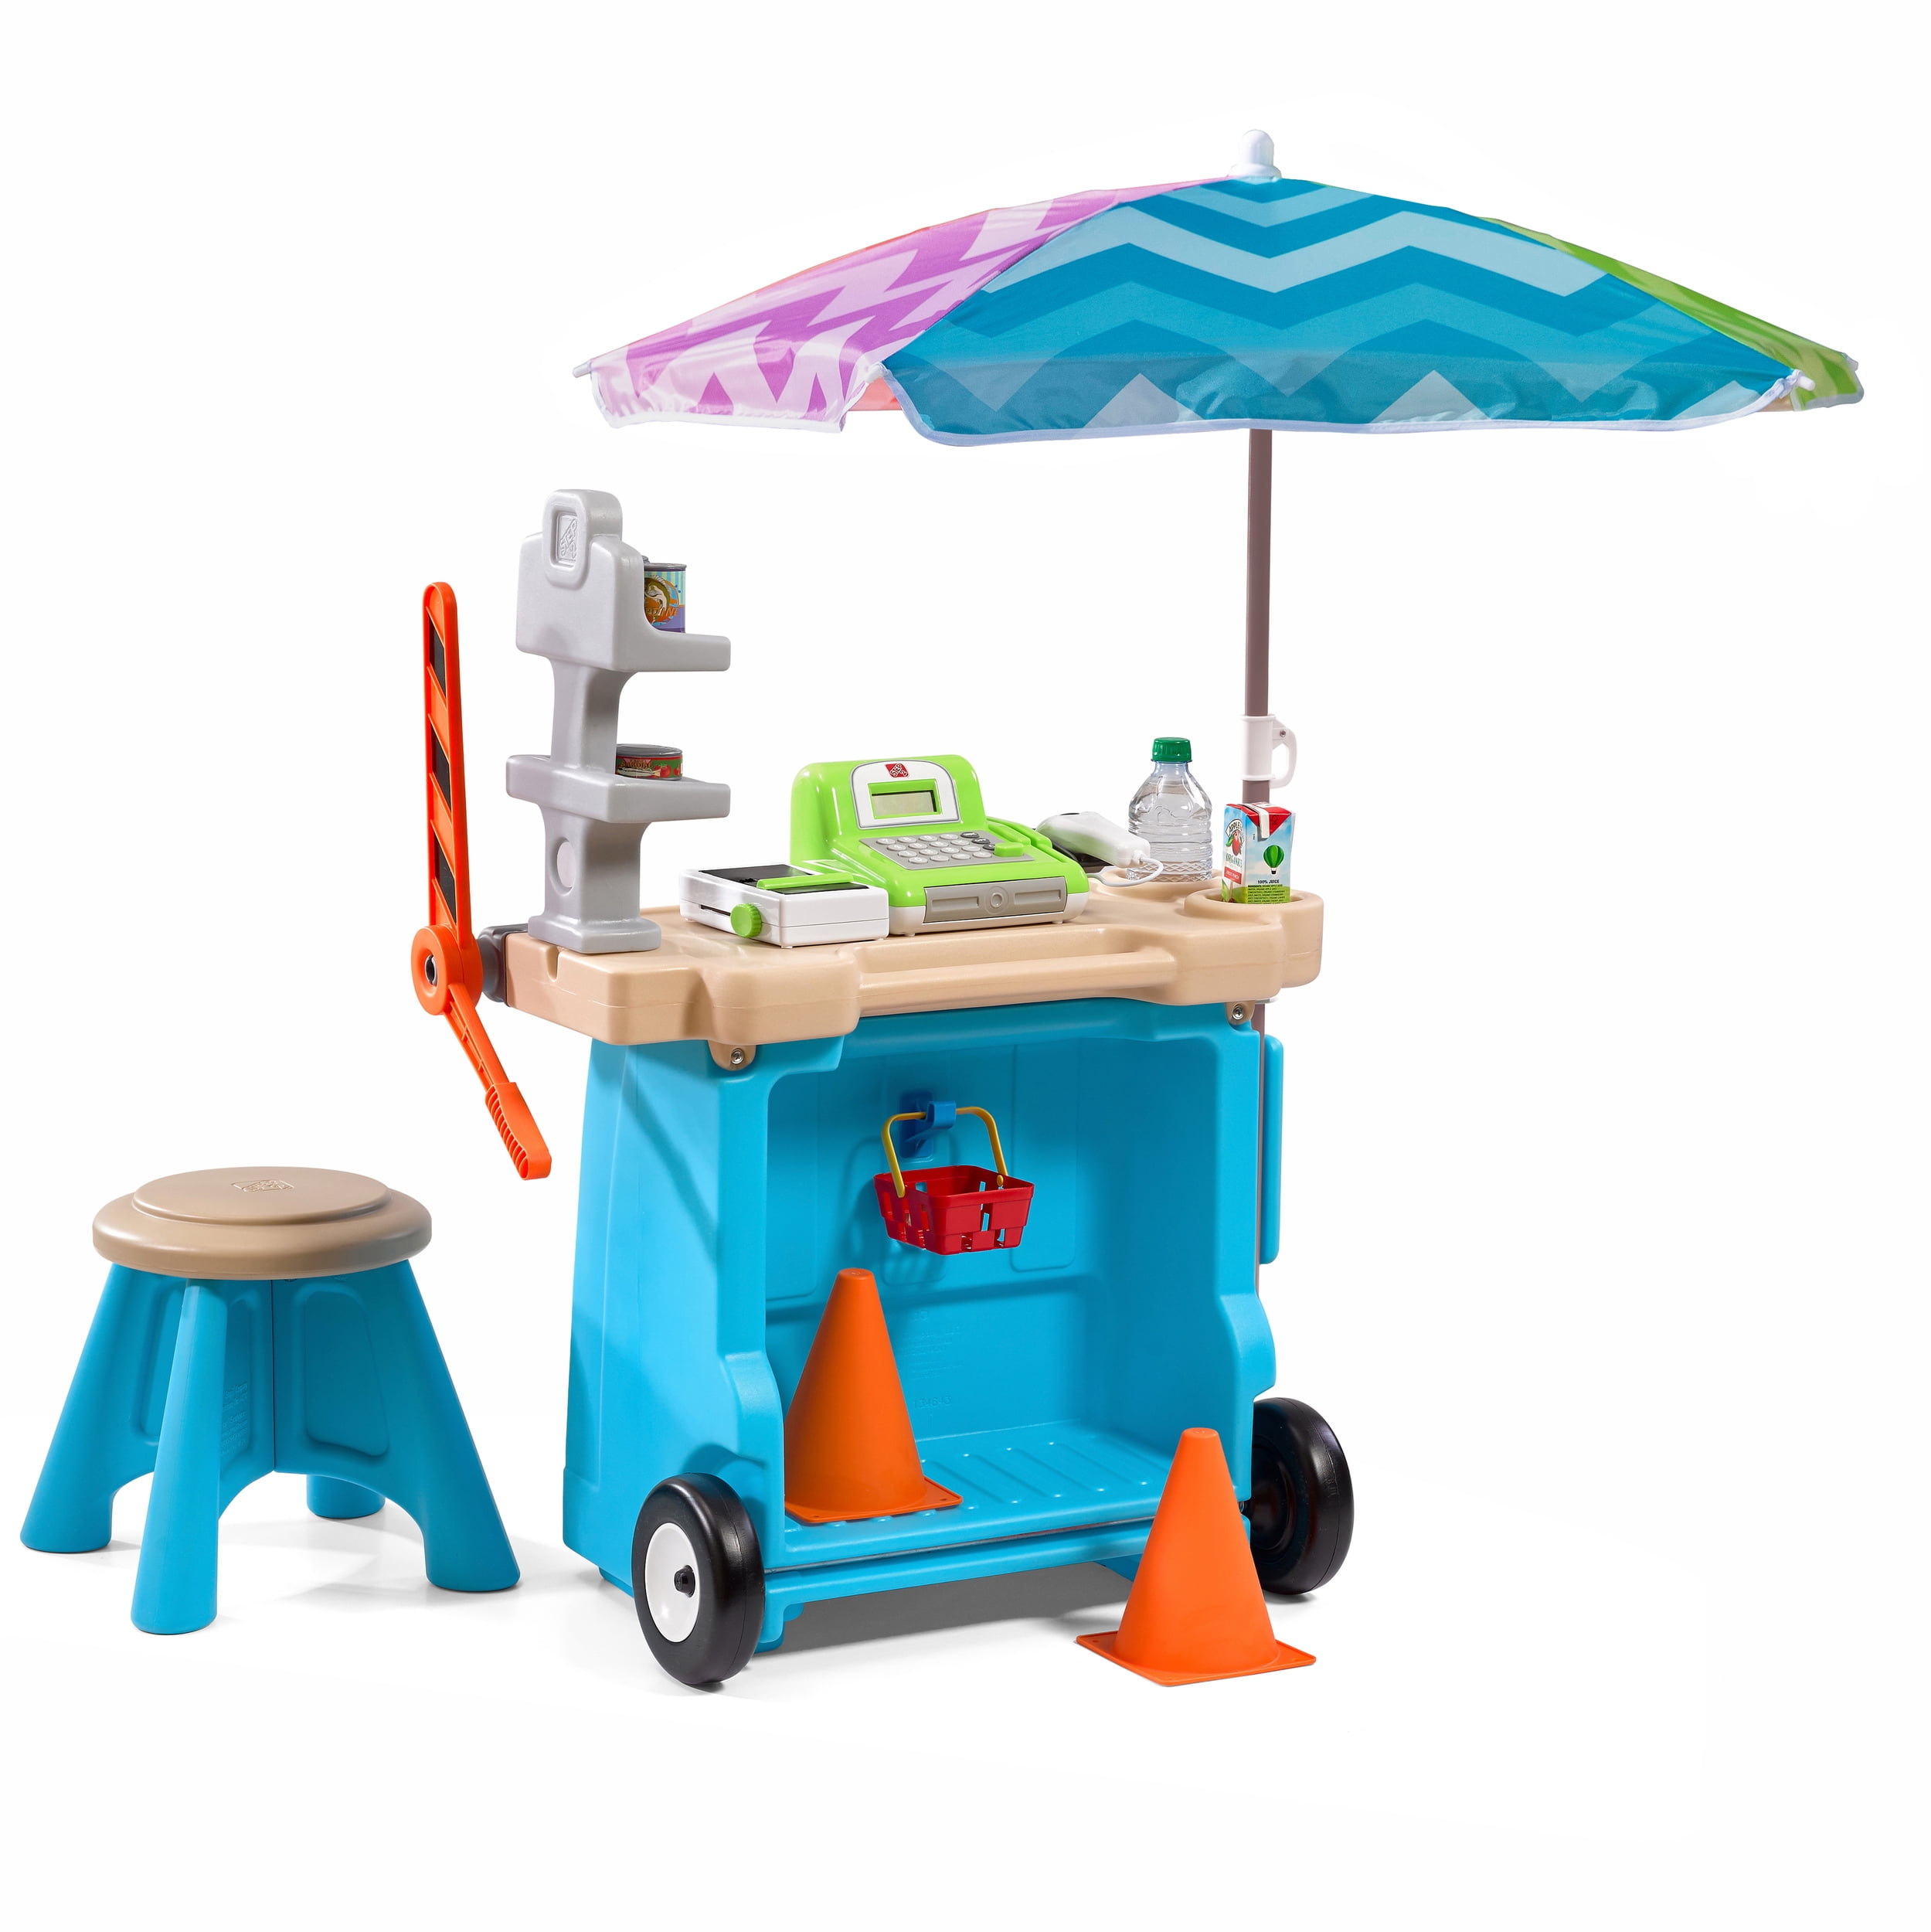 Step2 Stop & Go Market Toddler Blue Kids Plastic Playset with Umbrella - 2